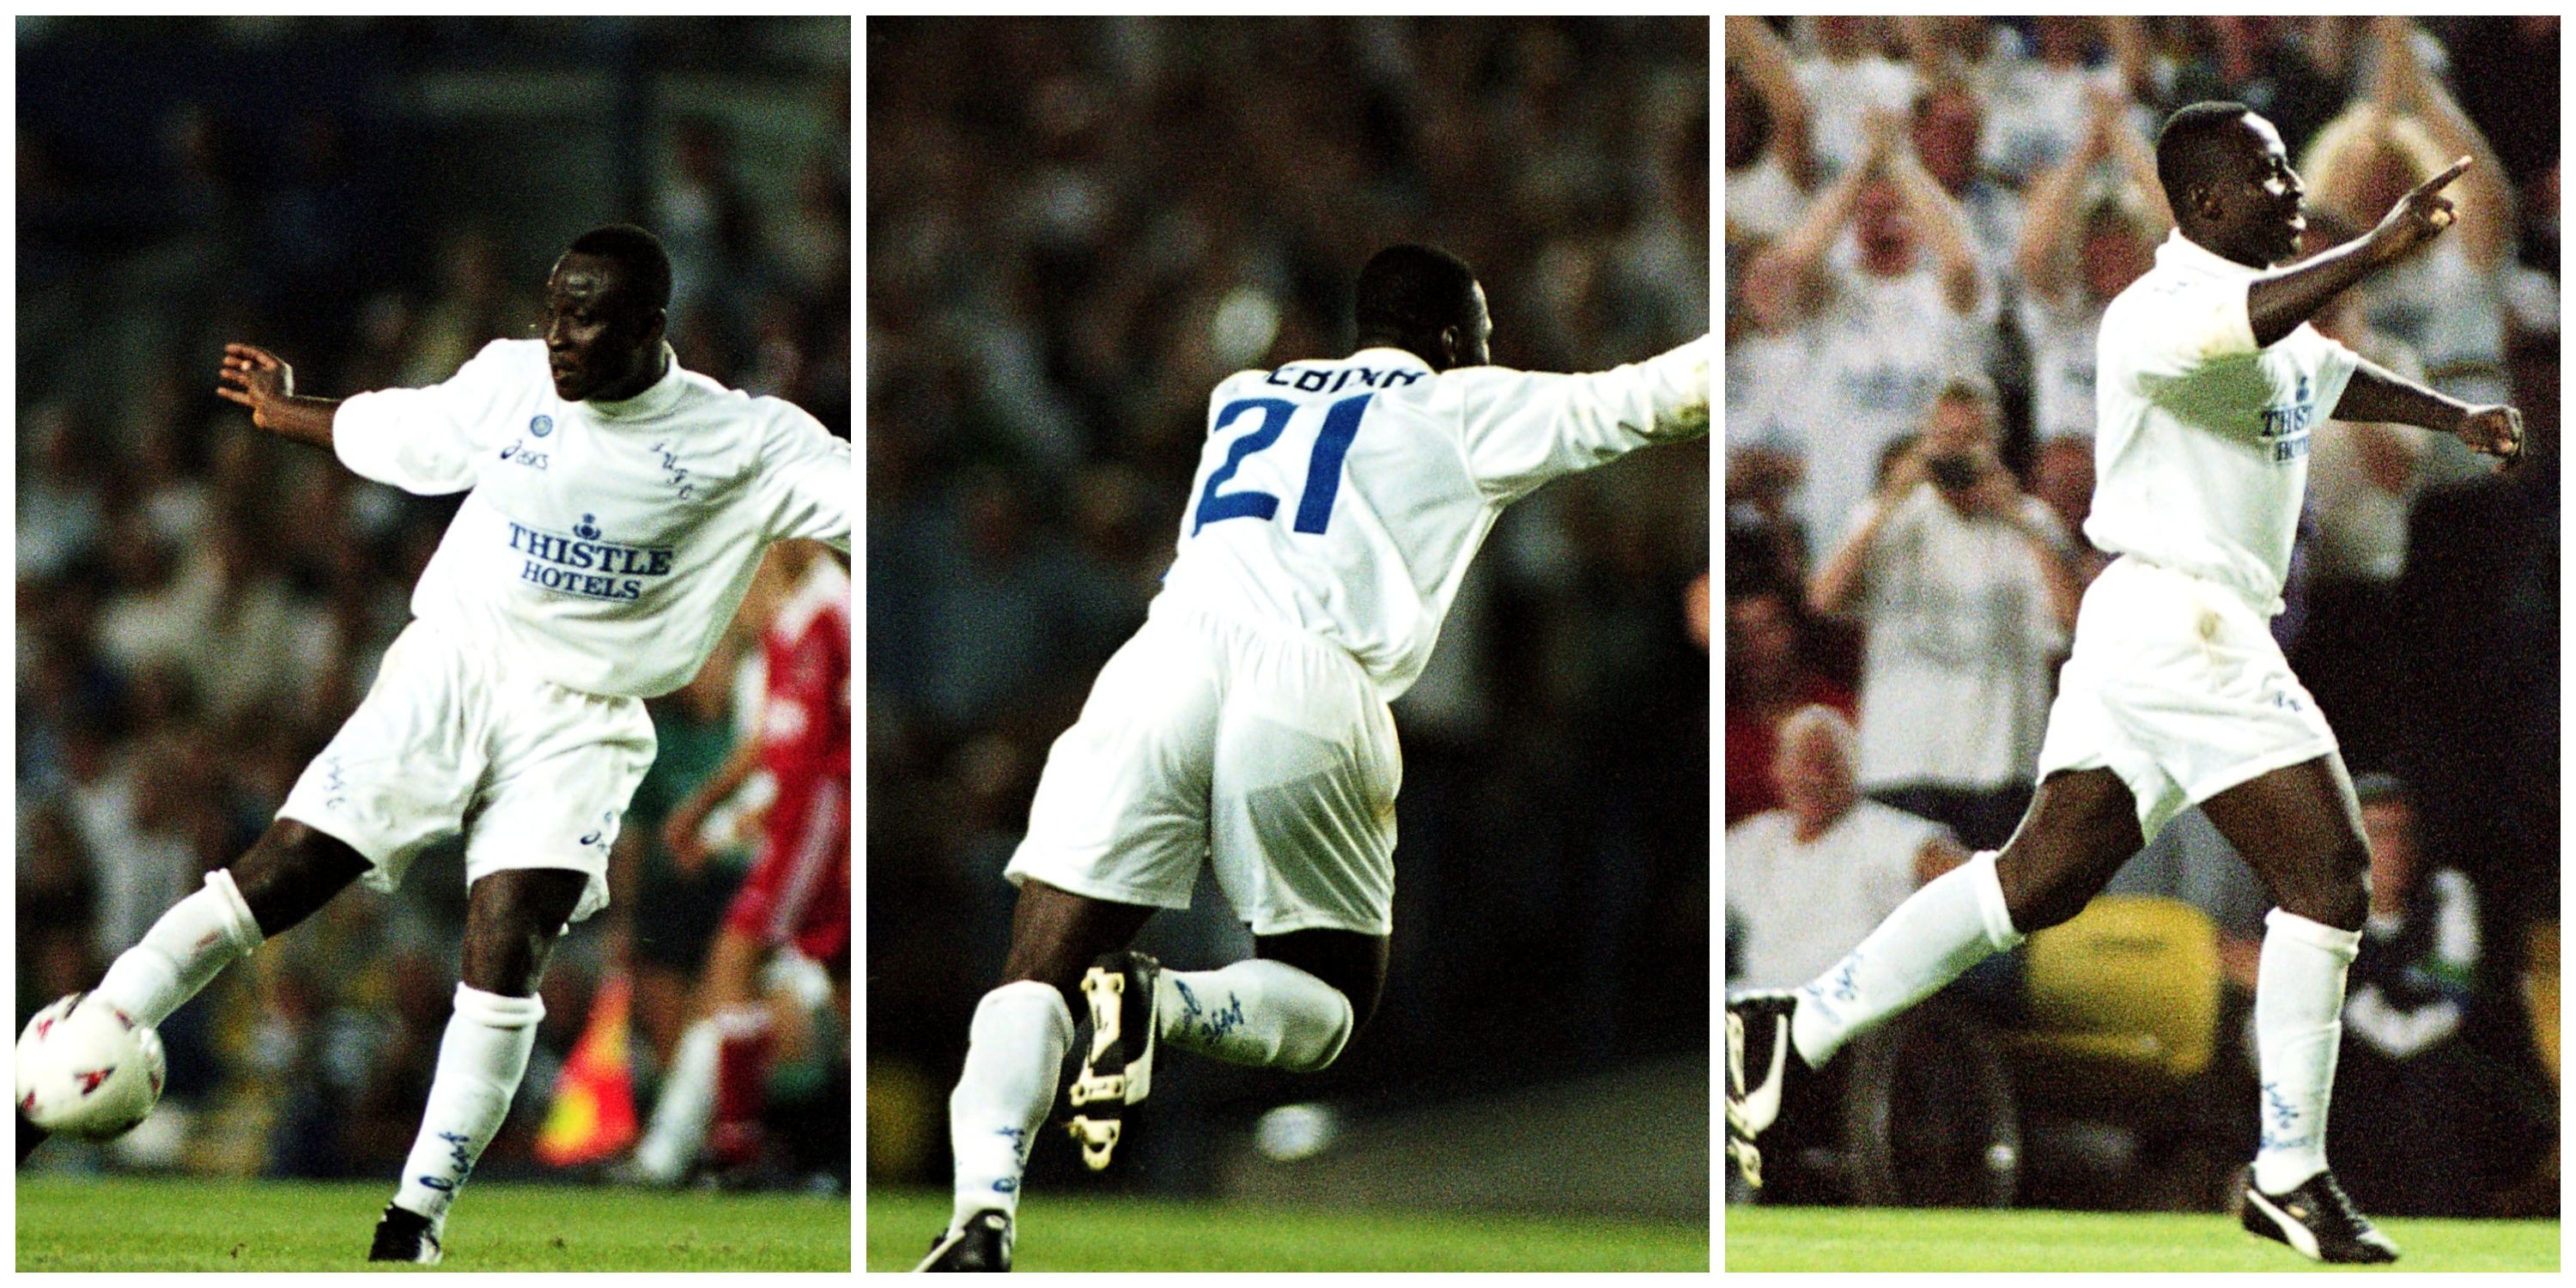 Tony Yeboah scoring against Liverpool.